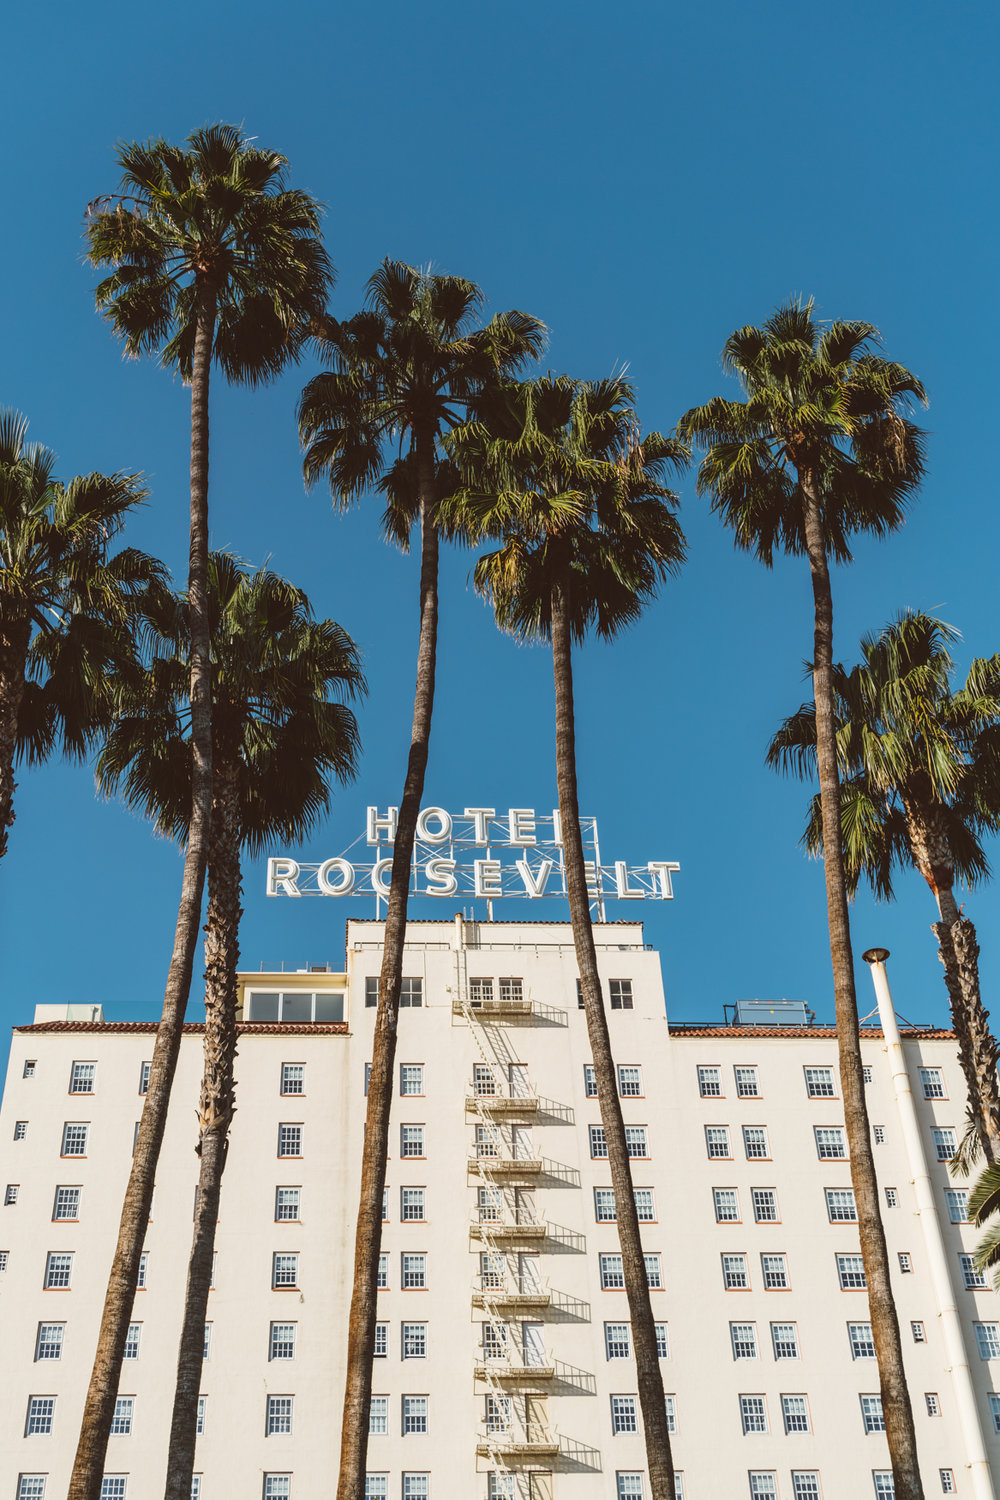  Hollywood Roosevelt Hotel 